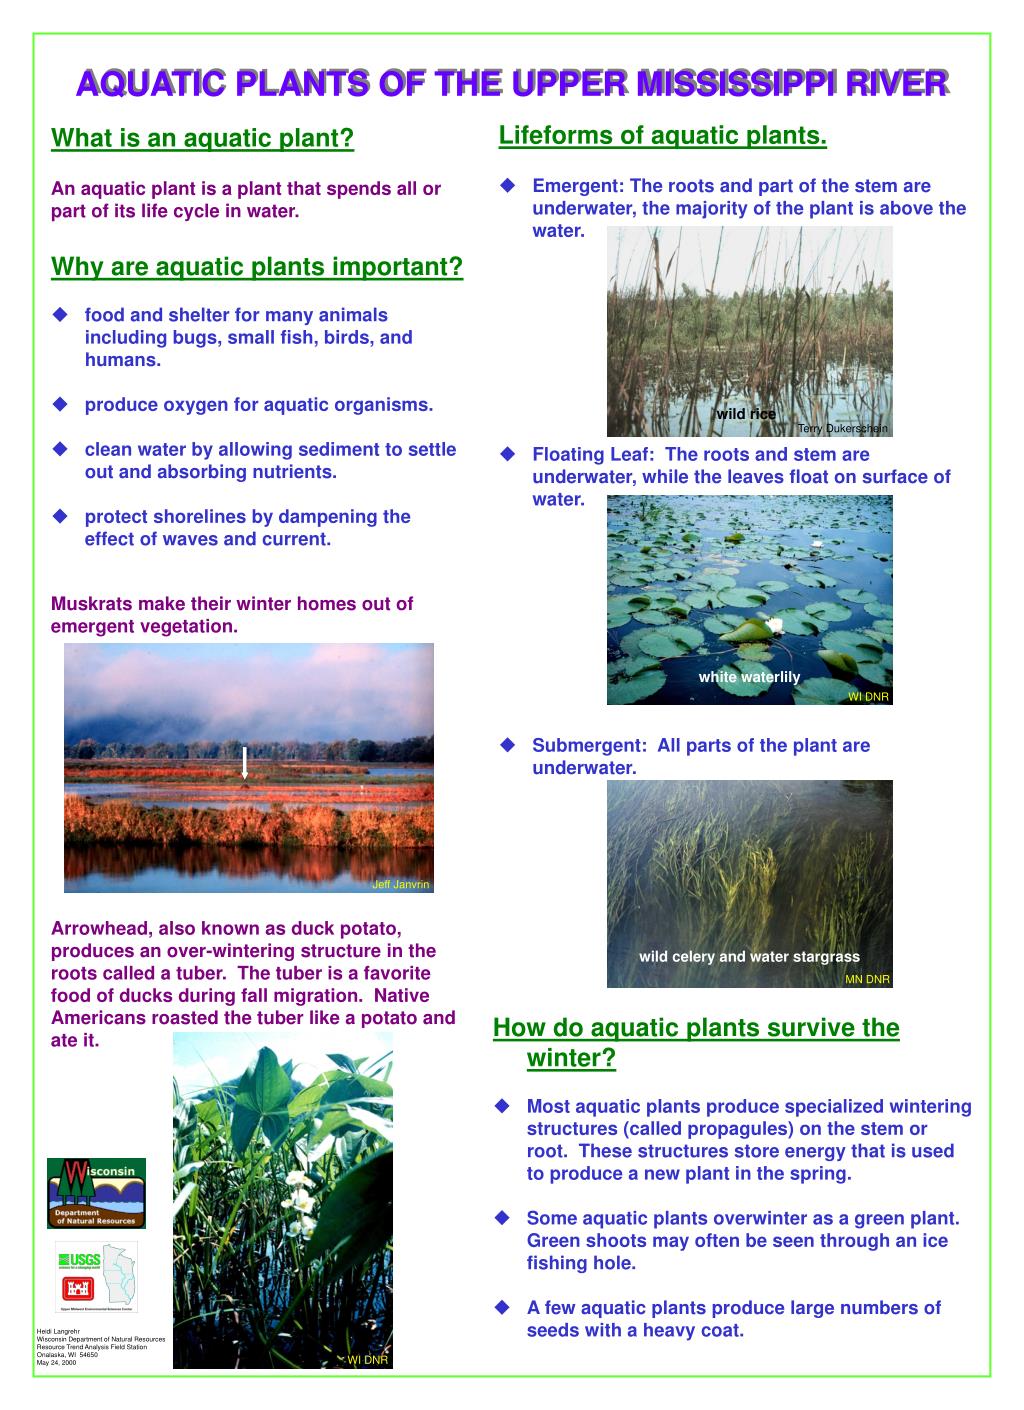 PPT - Lifeforms of aquatic plants. PowerPoint Presentation, free